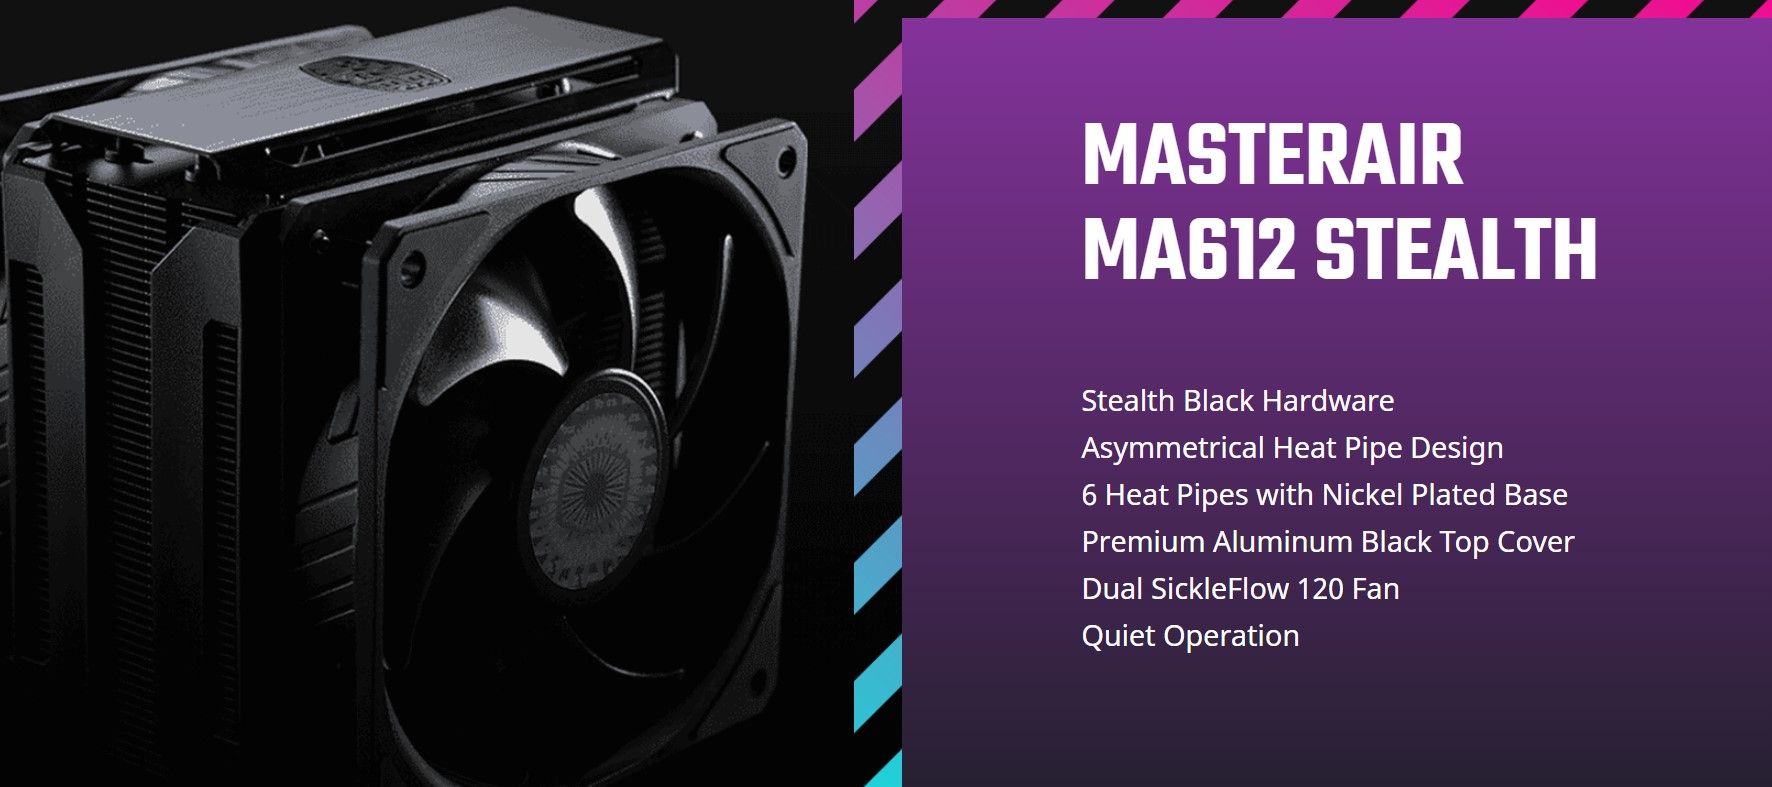 cooler master ma612 stealth cpu cooler